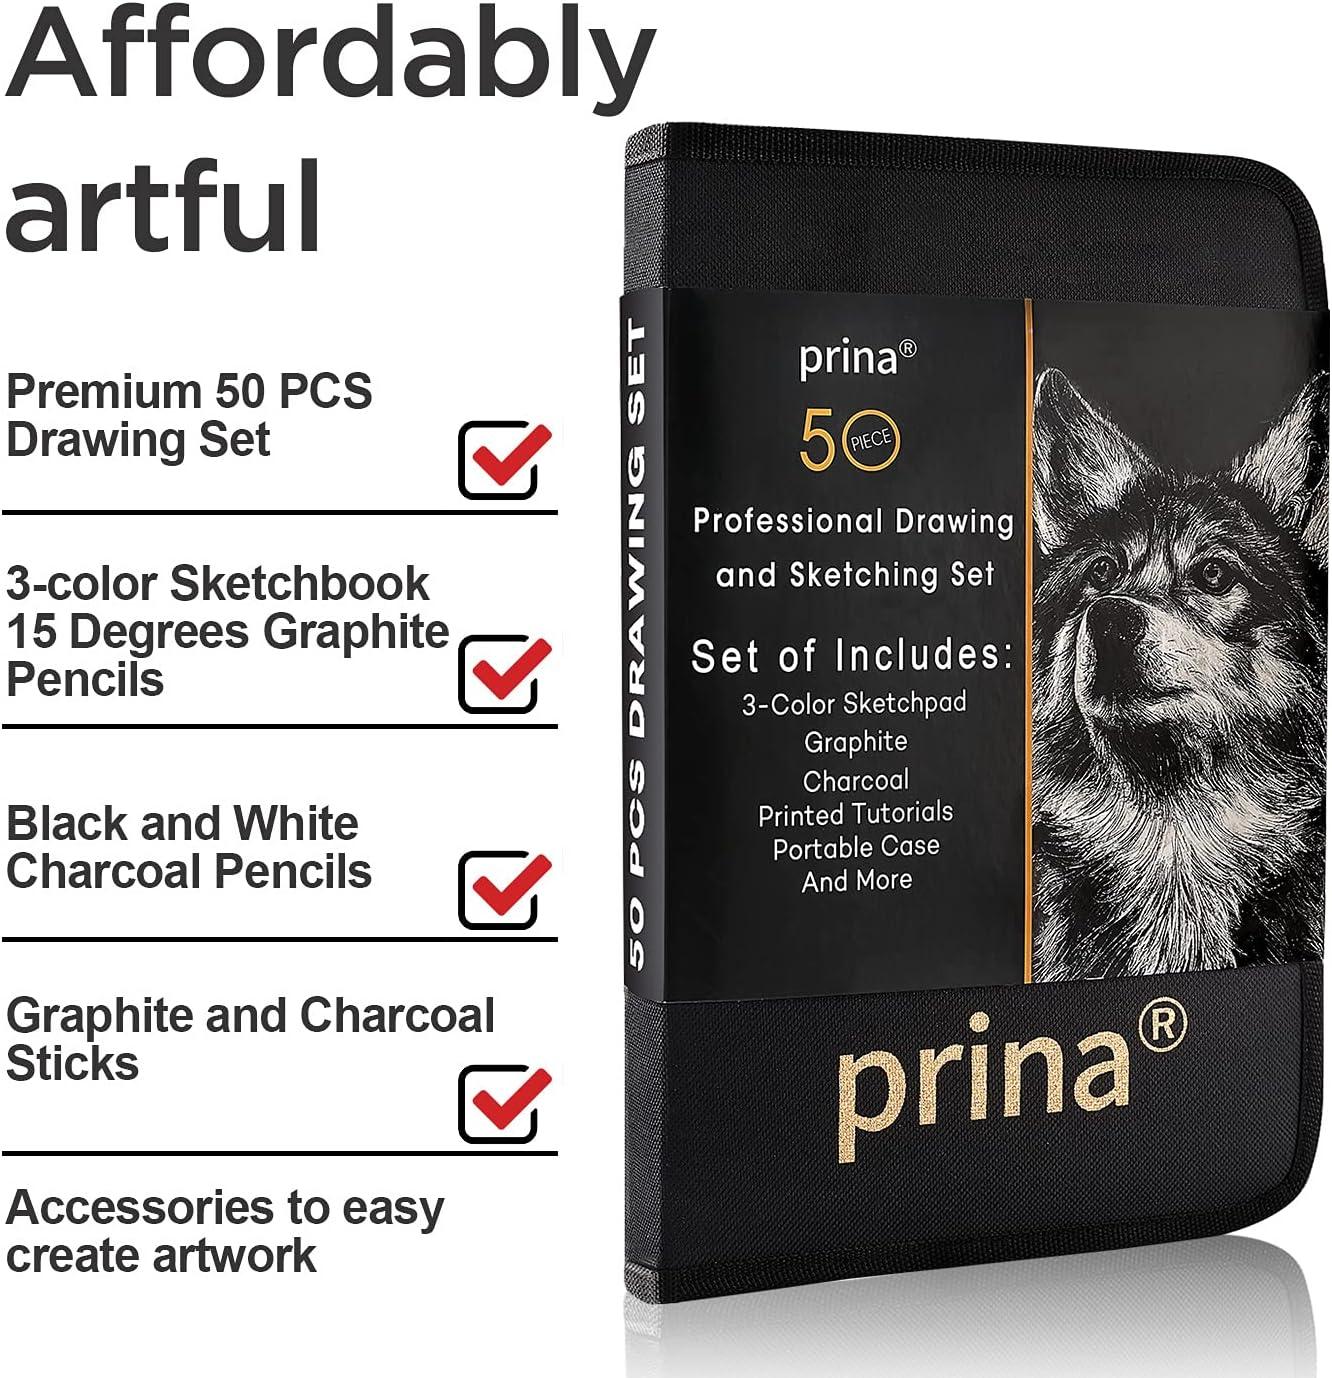 Prina 50 Pack Drawing Set Sketch Kit Sketching Supplies With 3